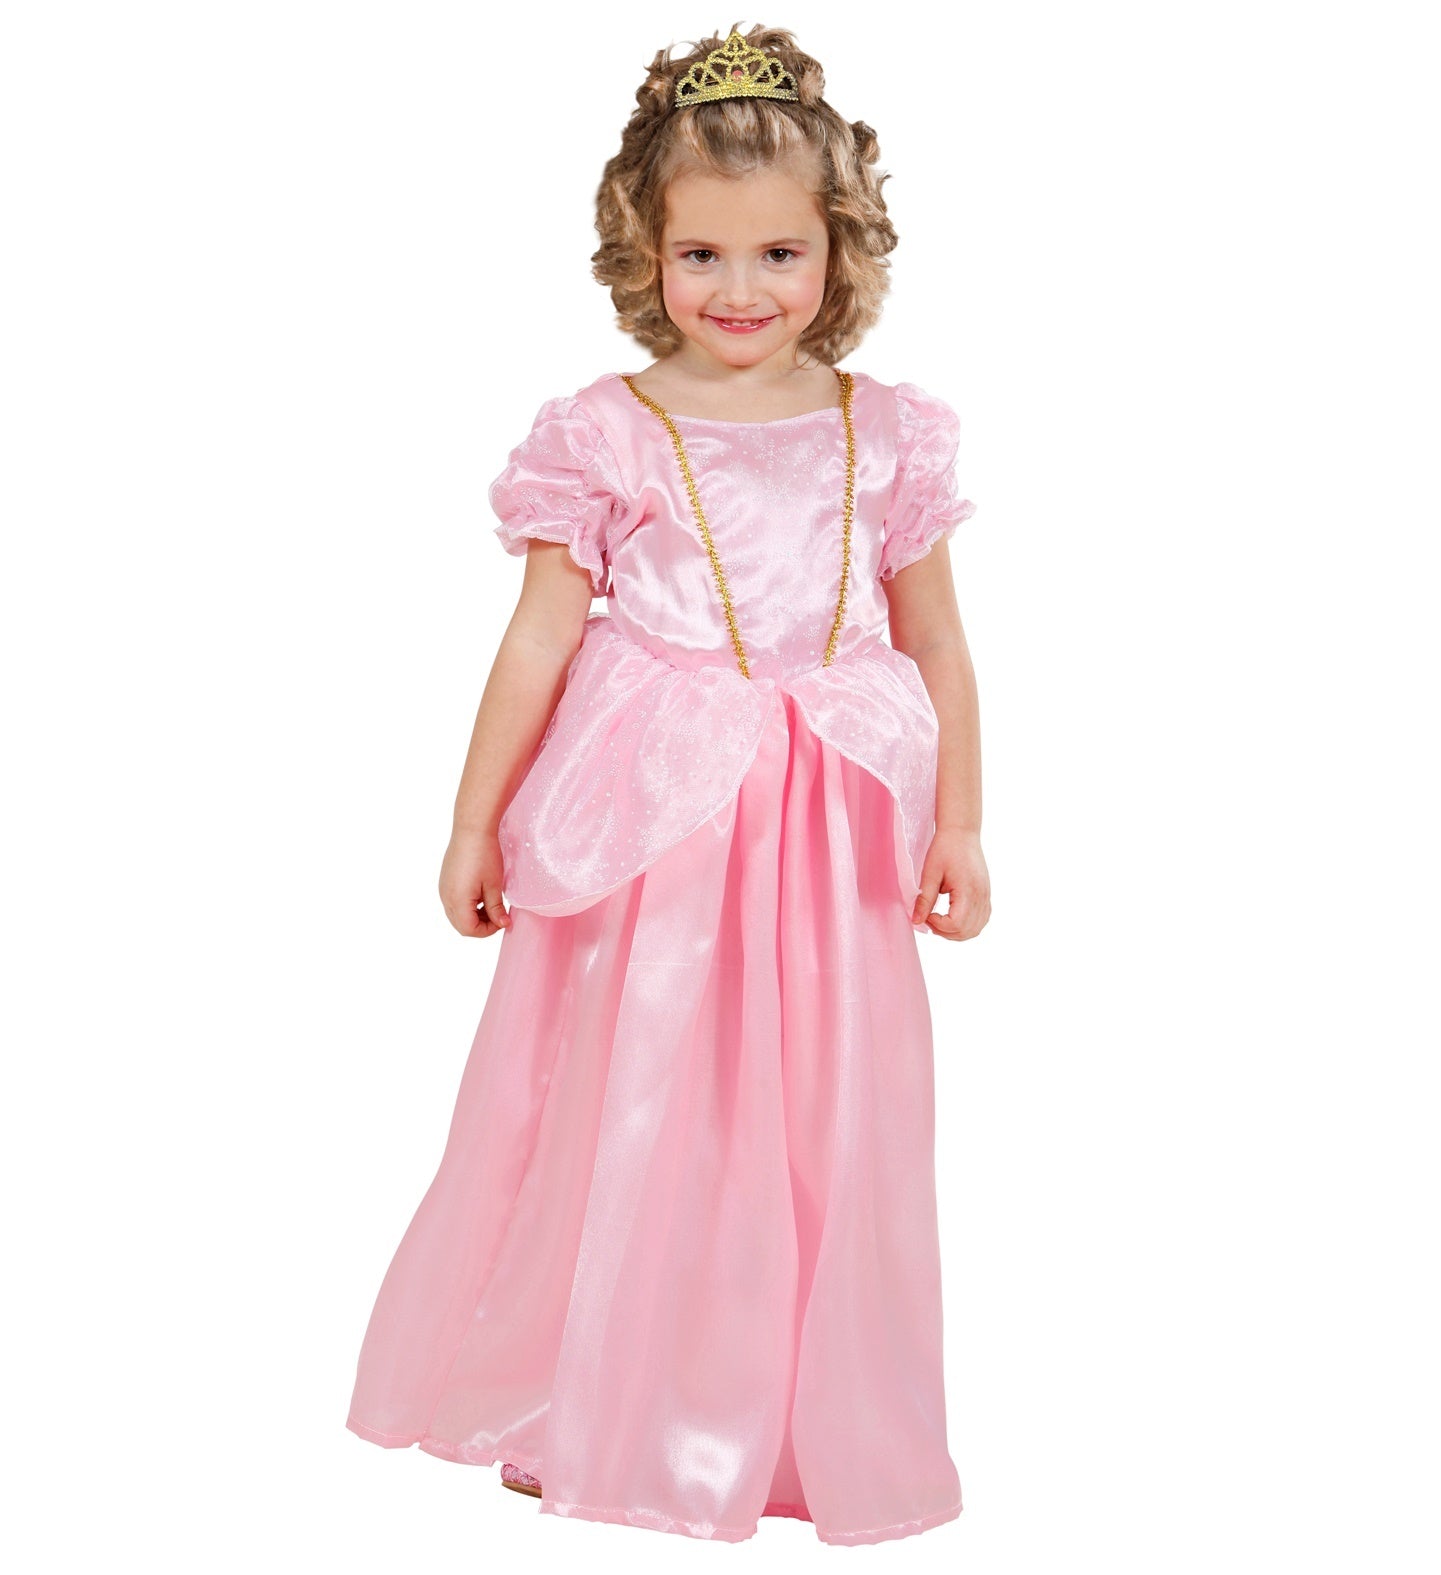 Widmann - Koning Prins & Adel Kostuum - Beatrix Carmen Victoria Prinses - Meisje - roze - Maat 98 - Carnavalskleding - Verkleedkleding